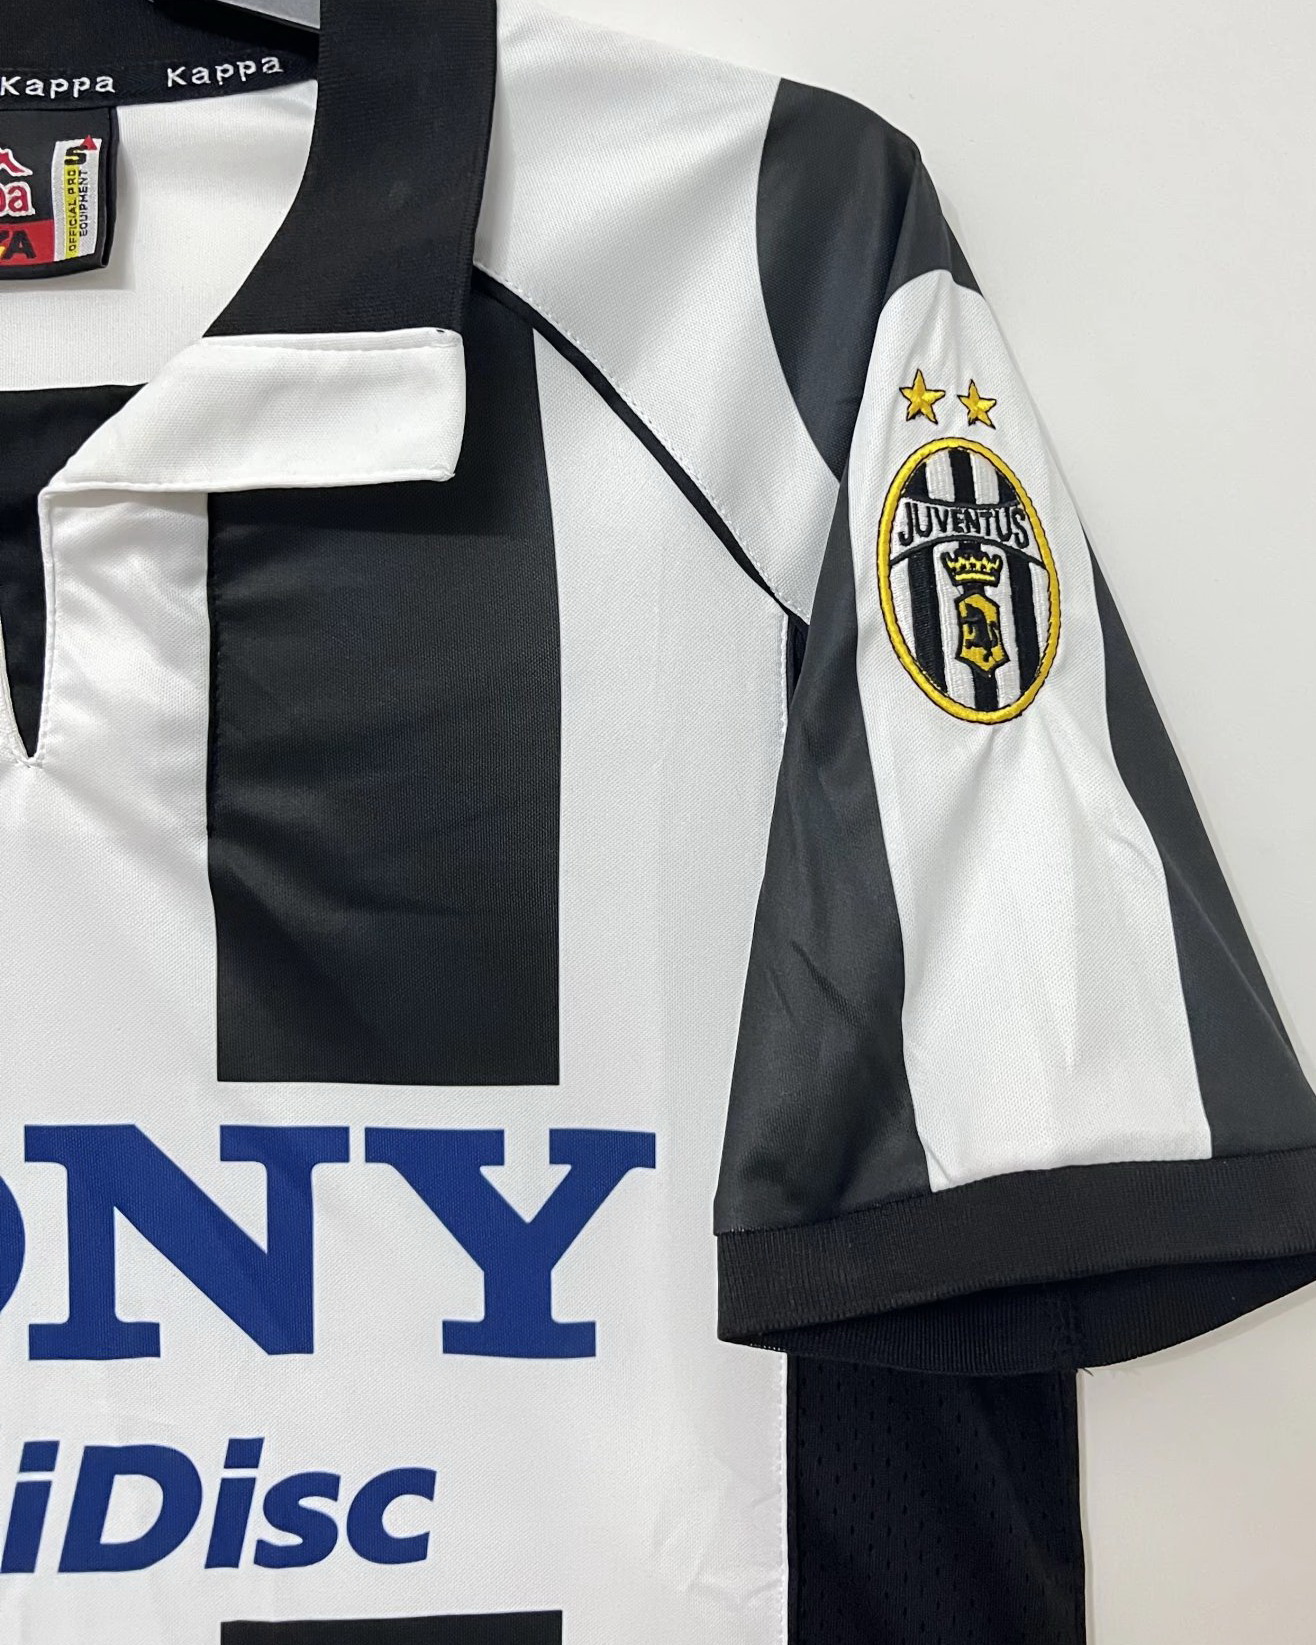 Juventus 1997/98 Home Soccer Jersey